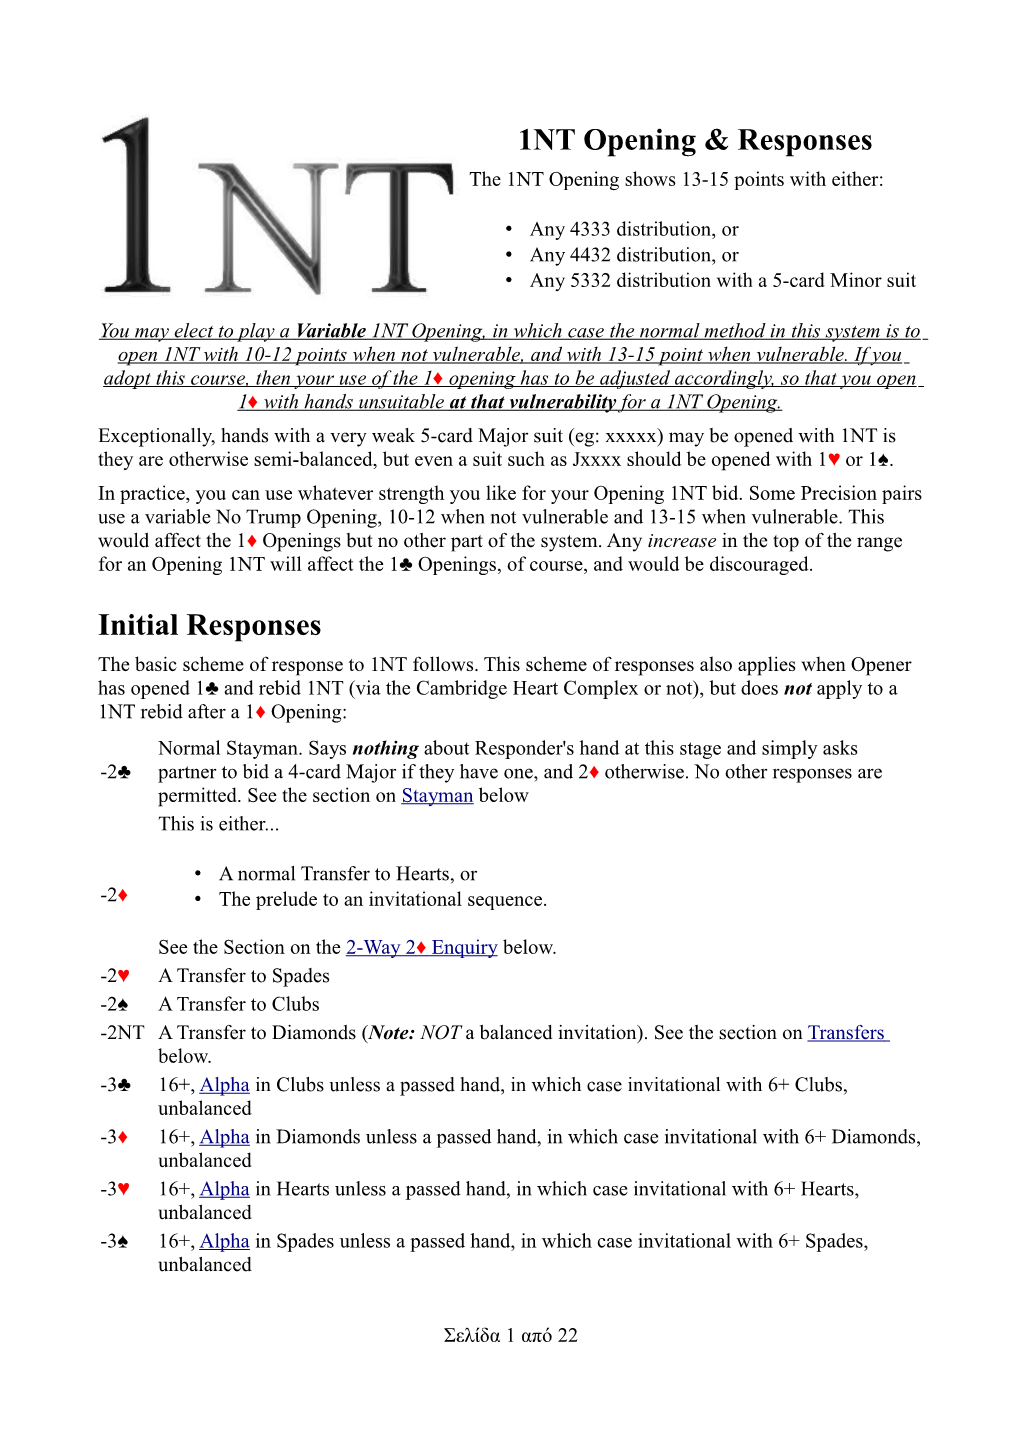 1NT Opening & Responses Initial Responses